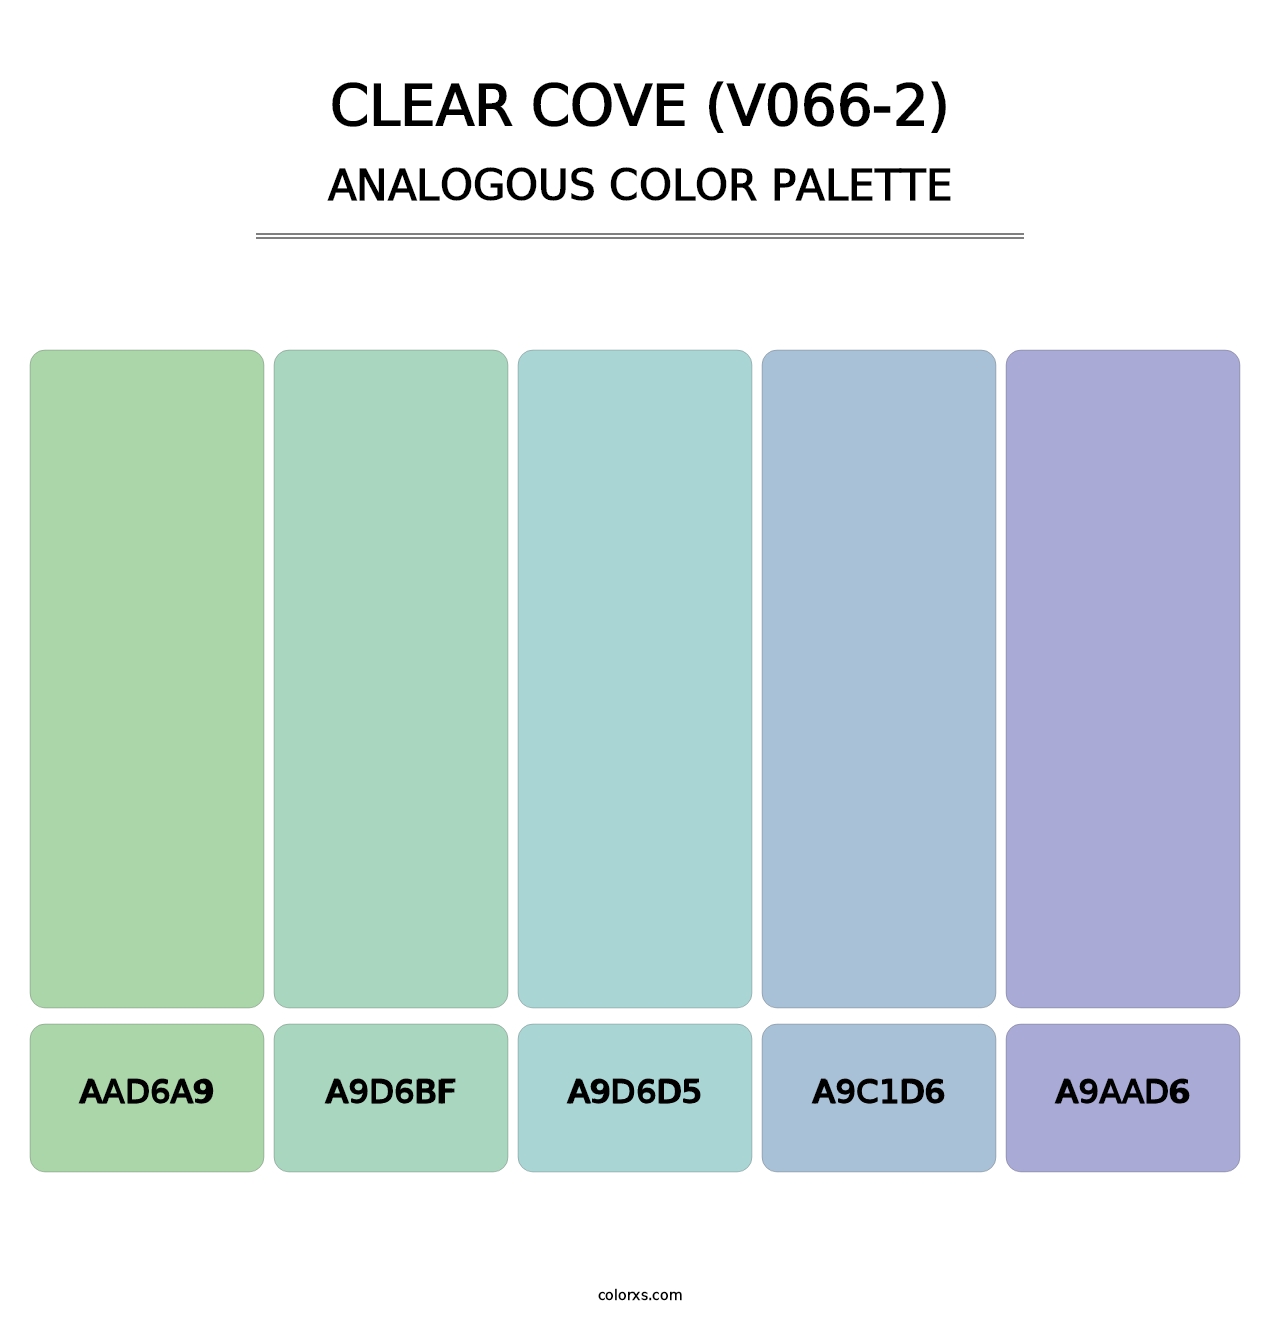 Clear Cove (V066-2) - Analogous Color Palette